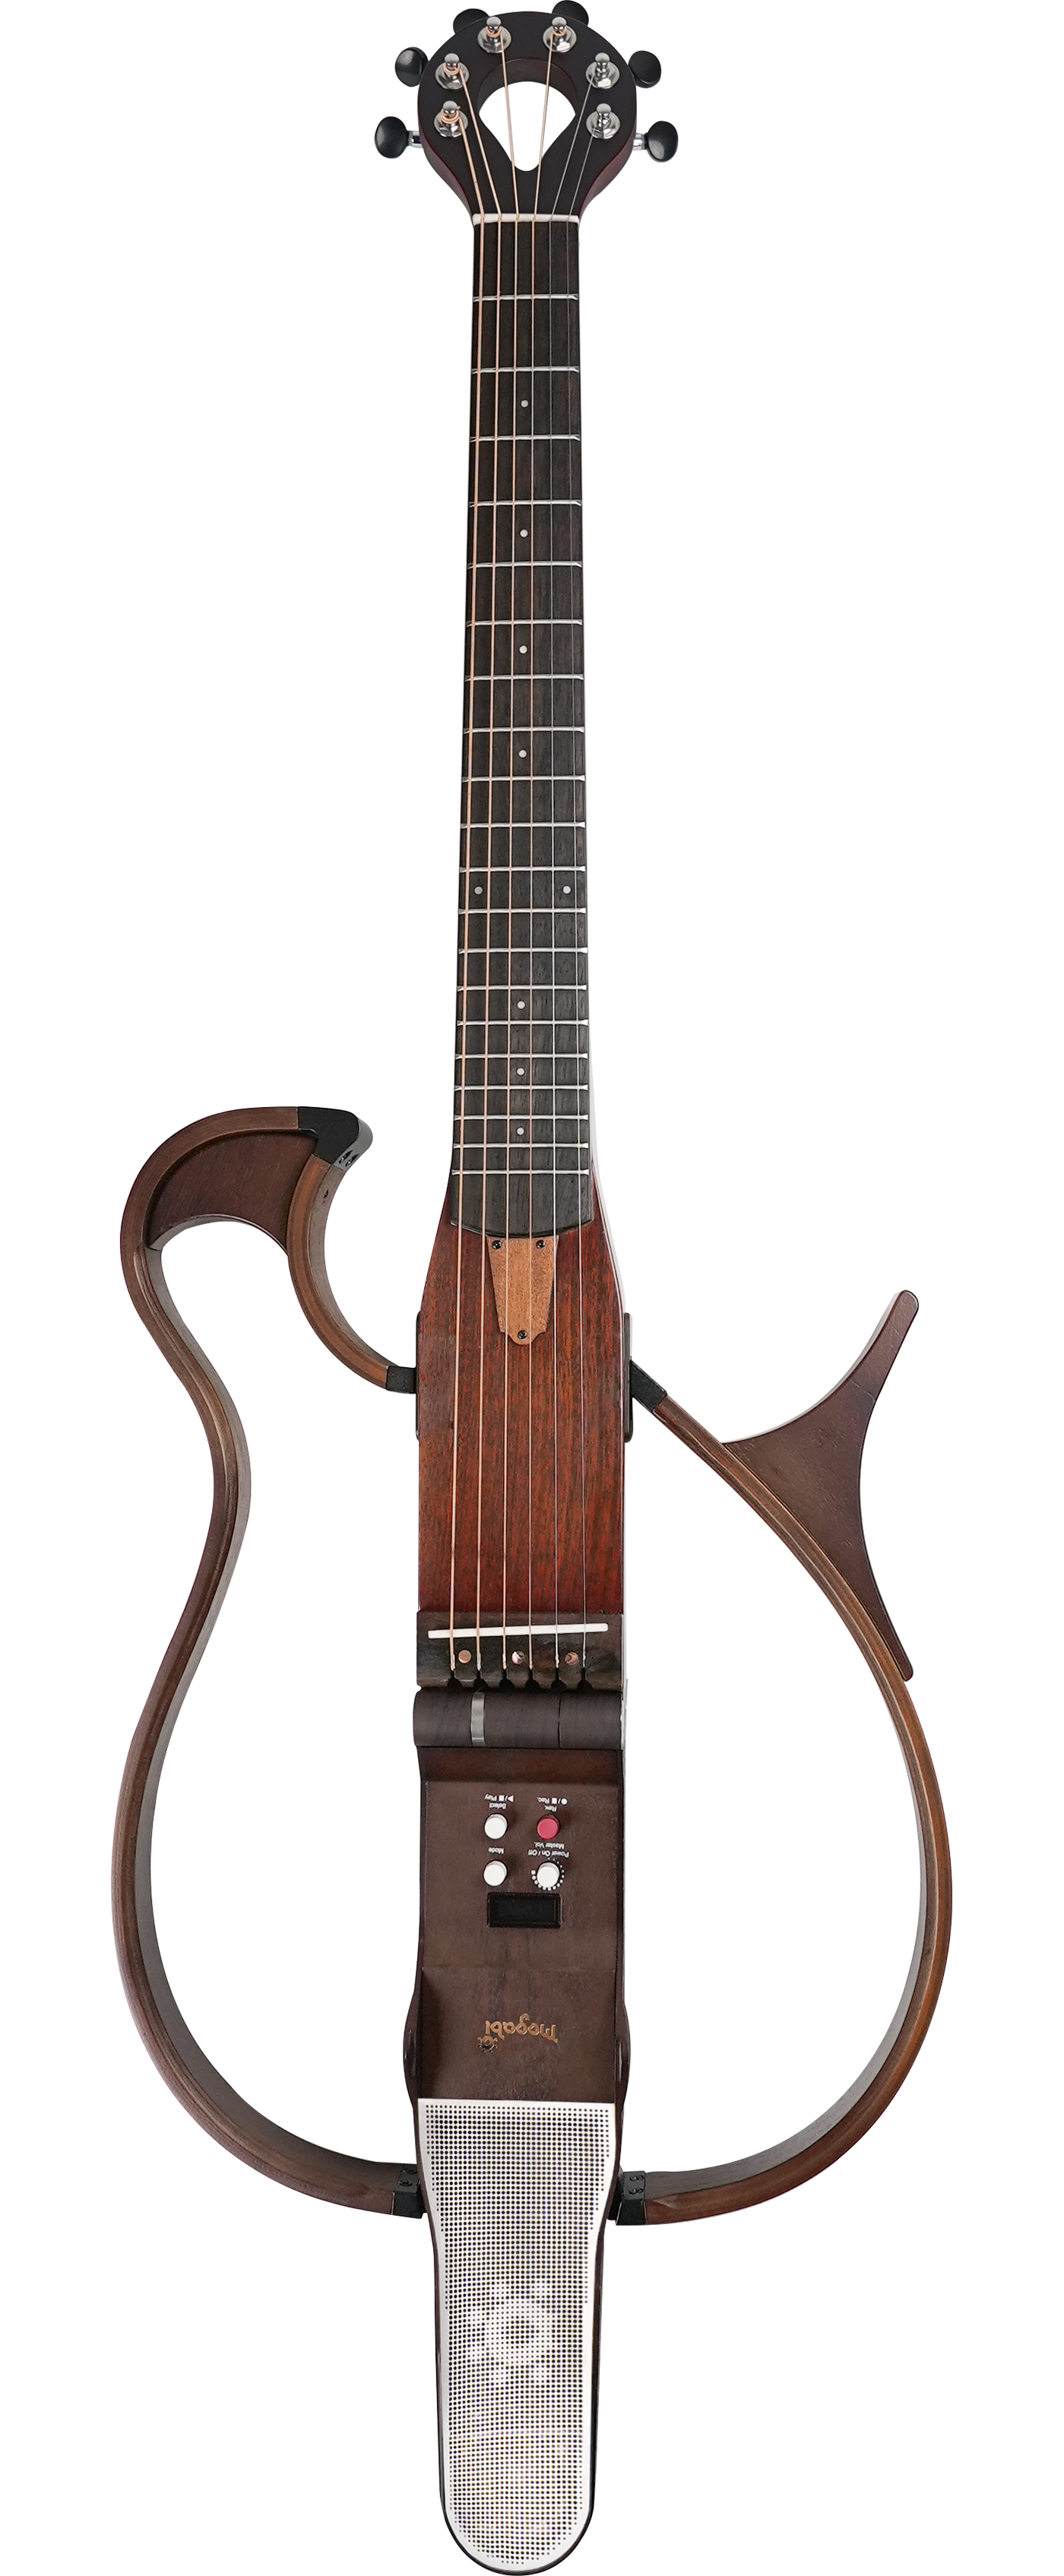 mogabi guitar 200 wood